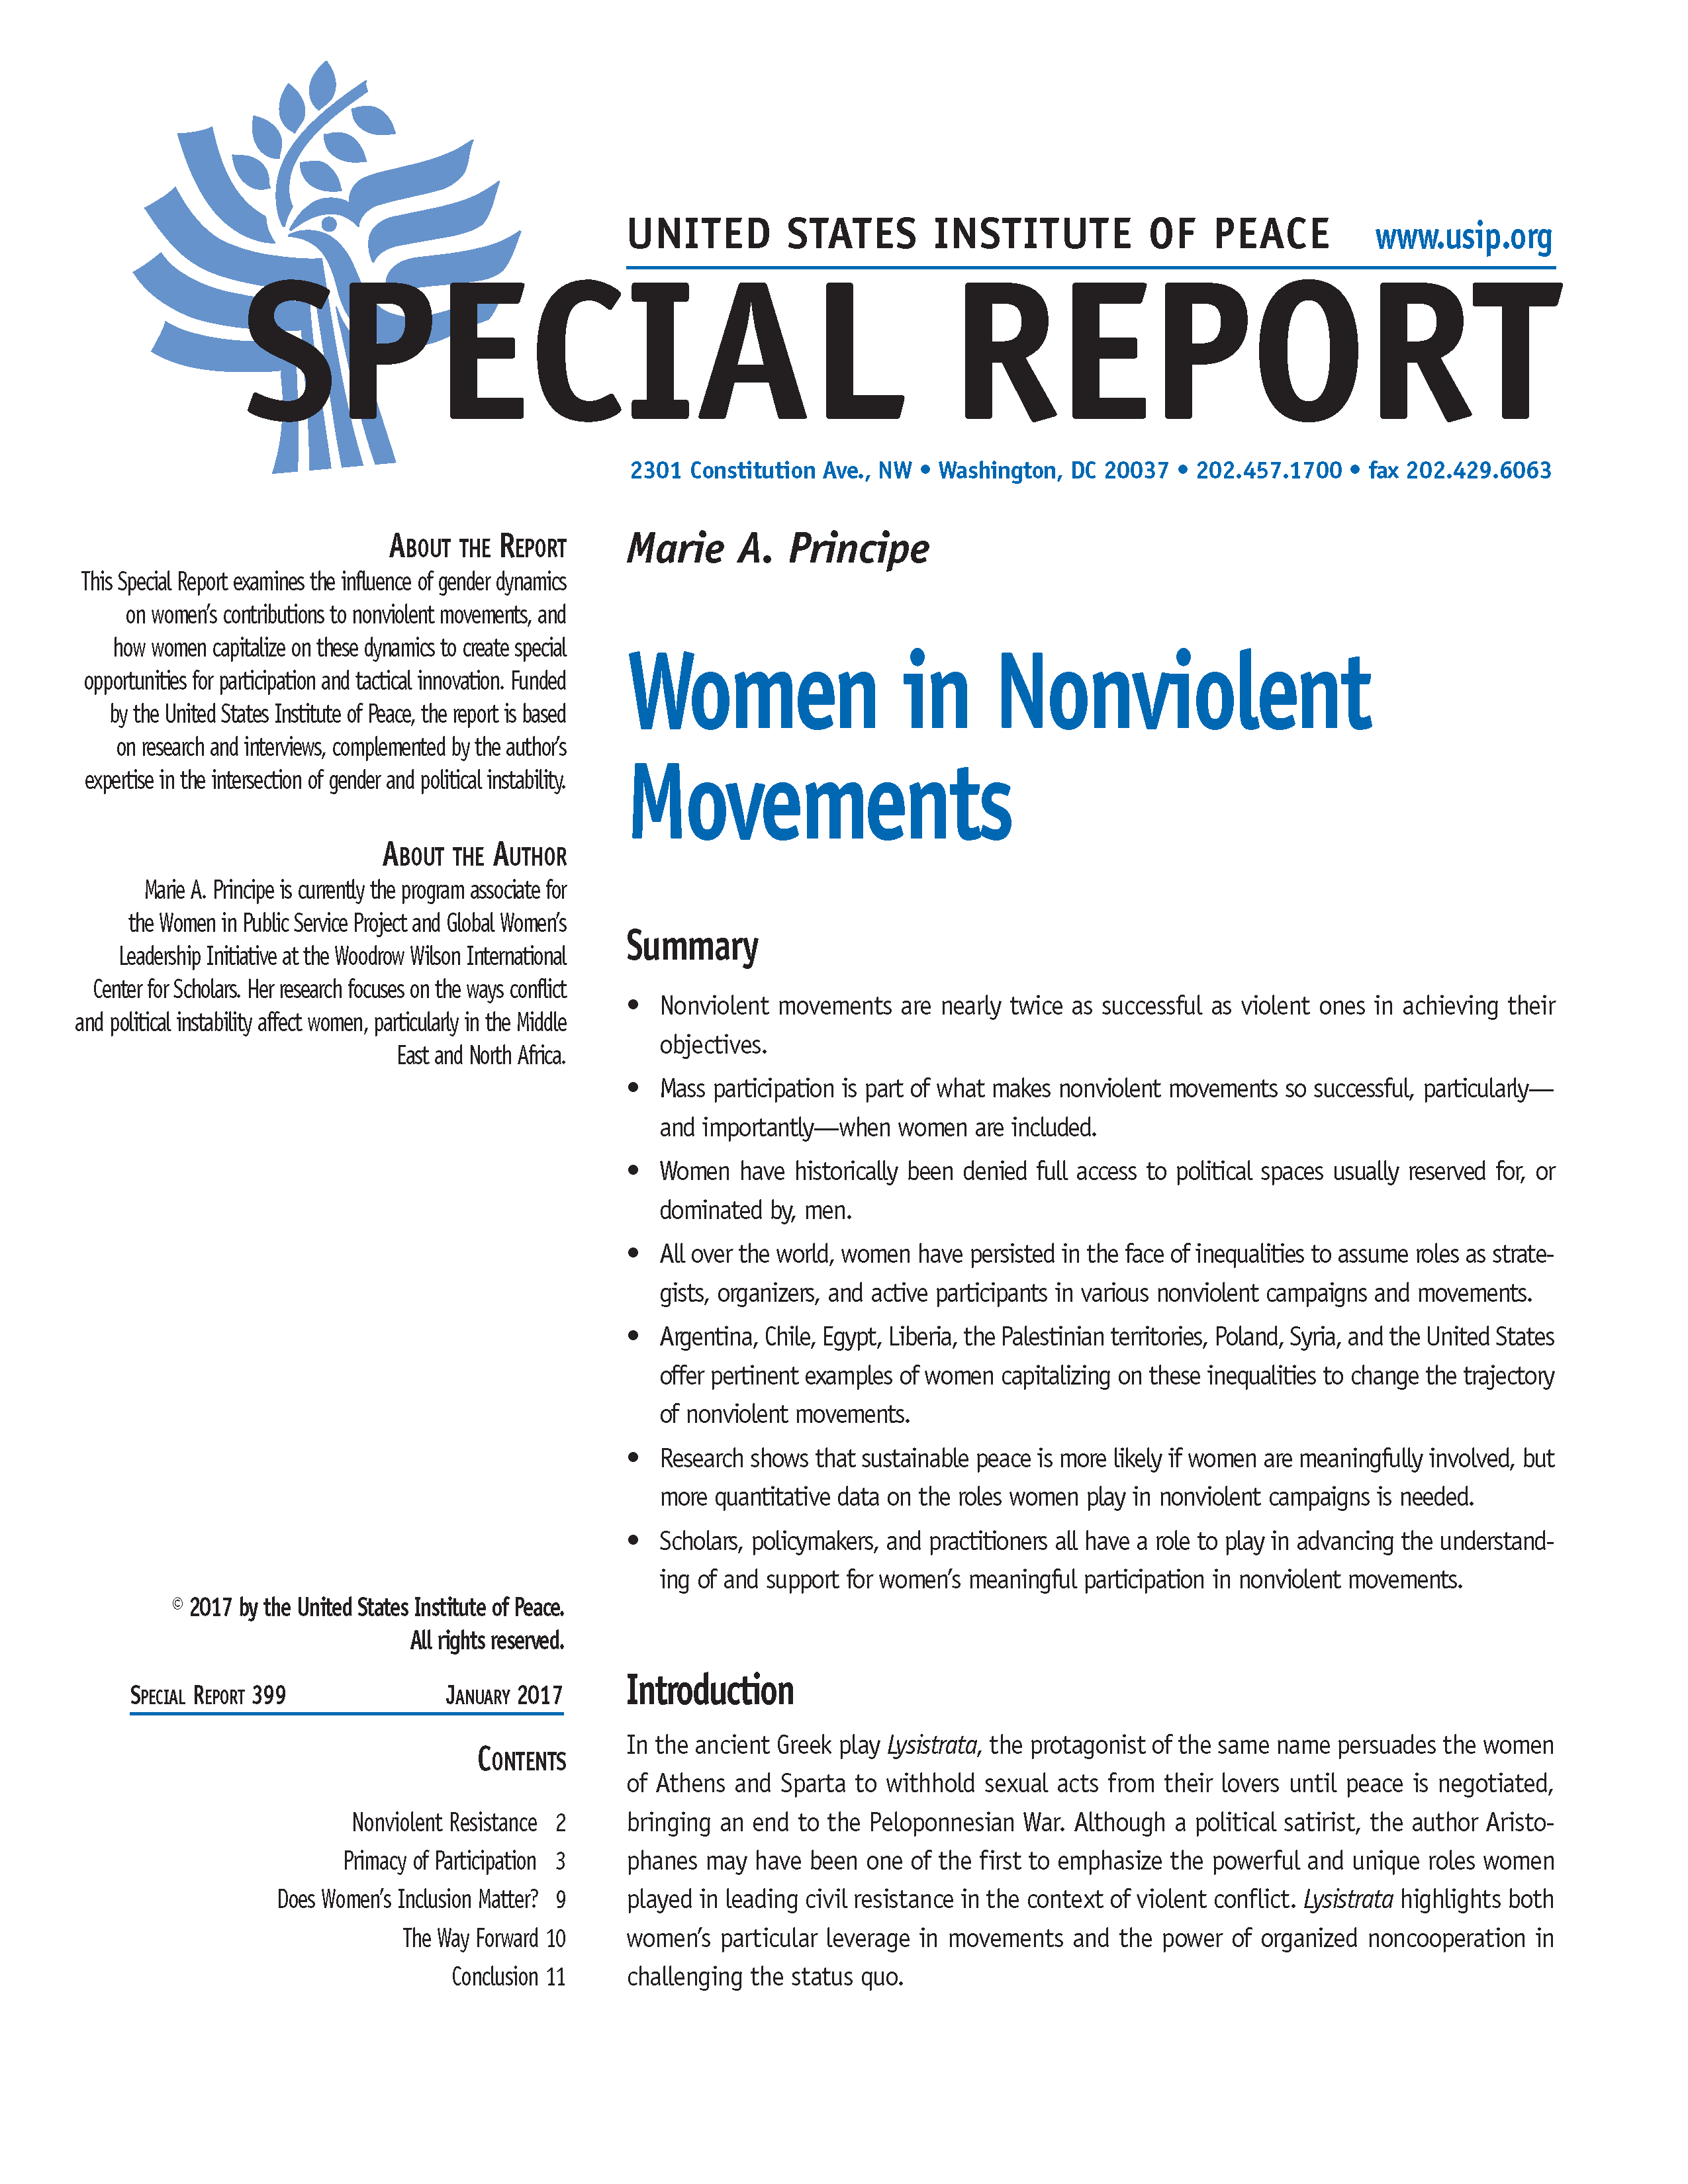 Women in Nonviolent Movements